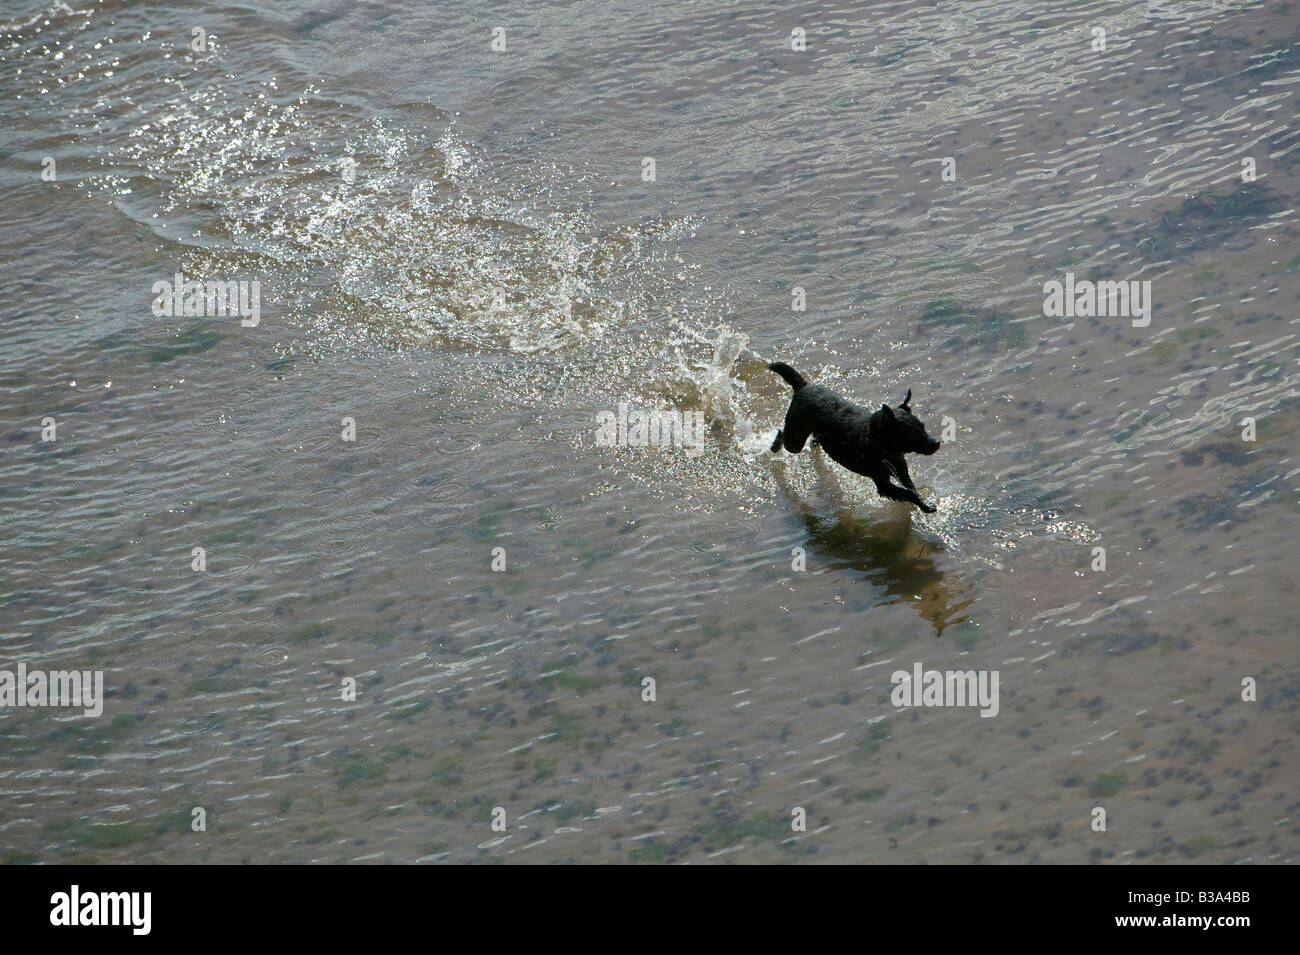 A small black dog runs through shallow water on a beach at Torquay Stock Photo